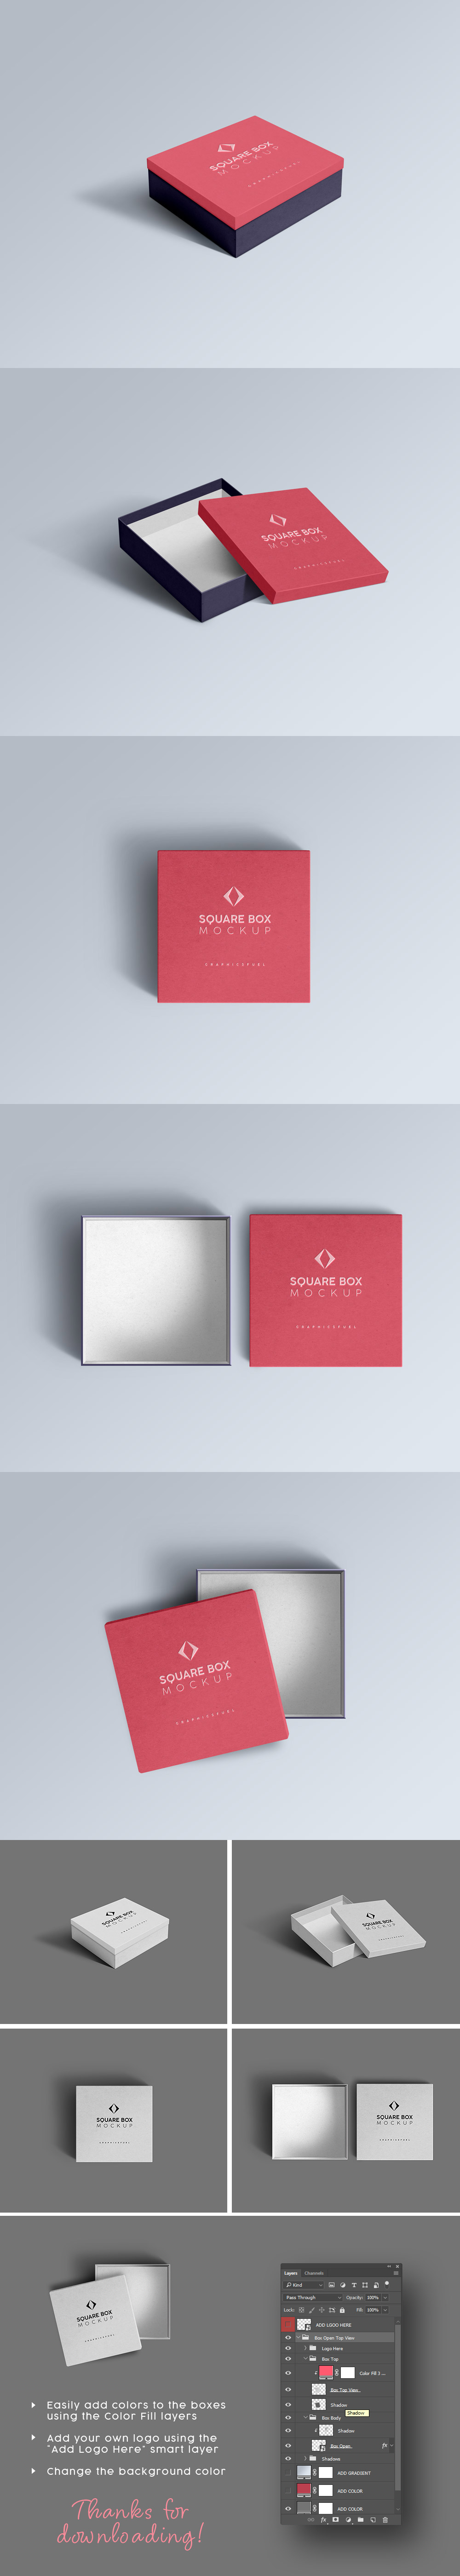 Square Boxes PSD Mockups